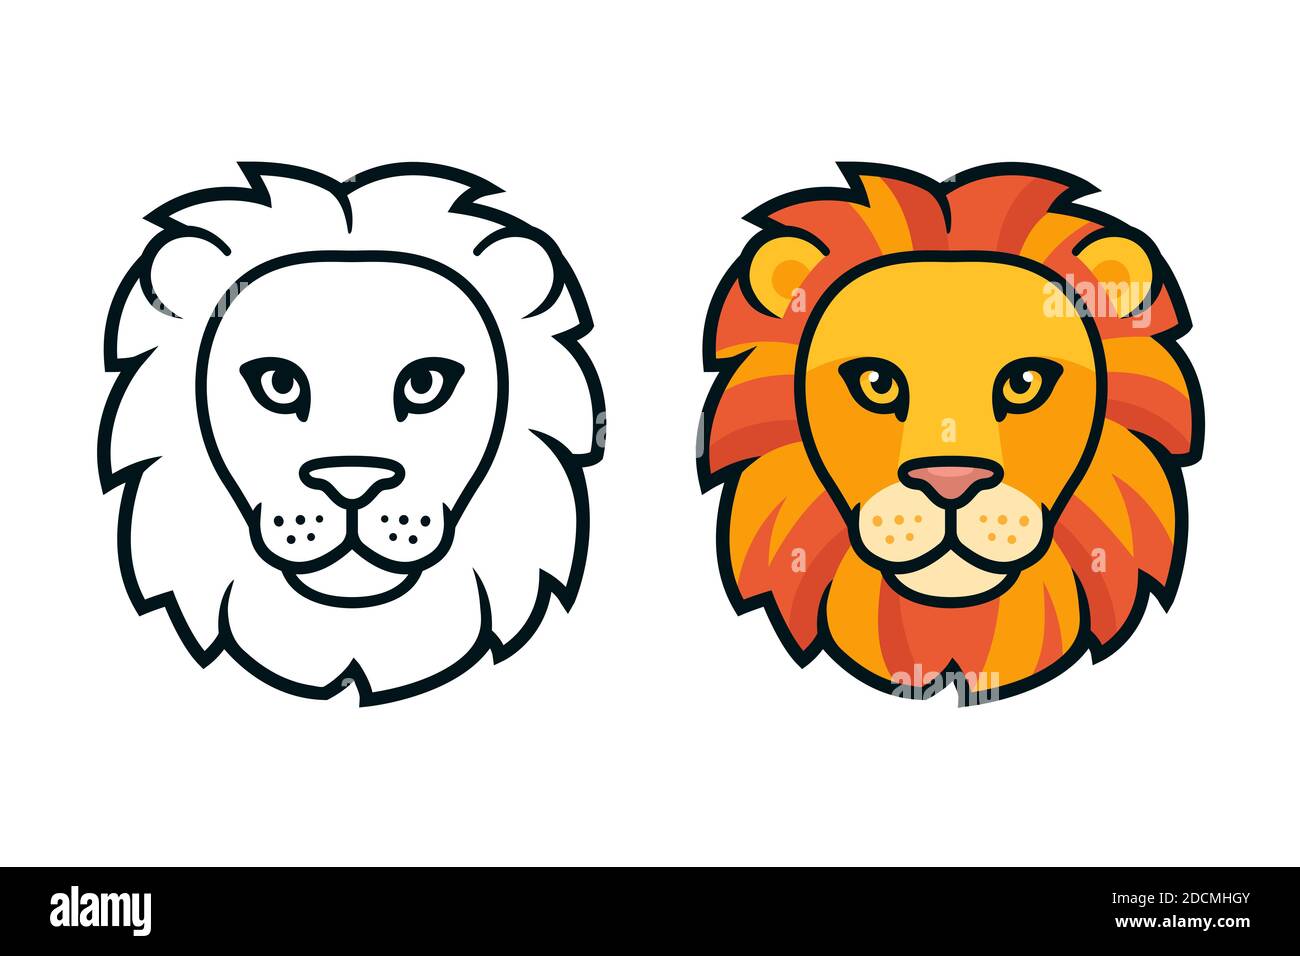 Löwenfärbung -Fotos und -Bildmaterial in hoher Auflösung – Alamy